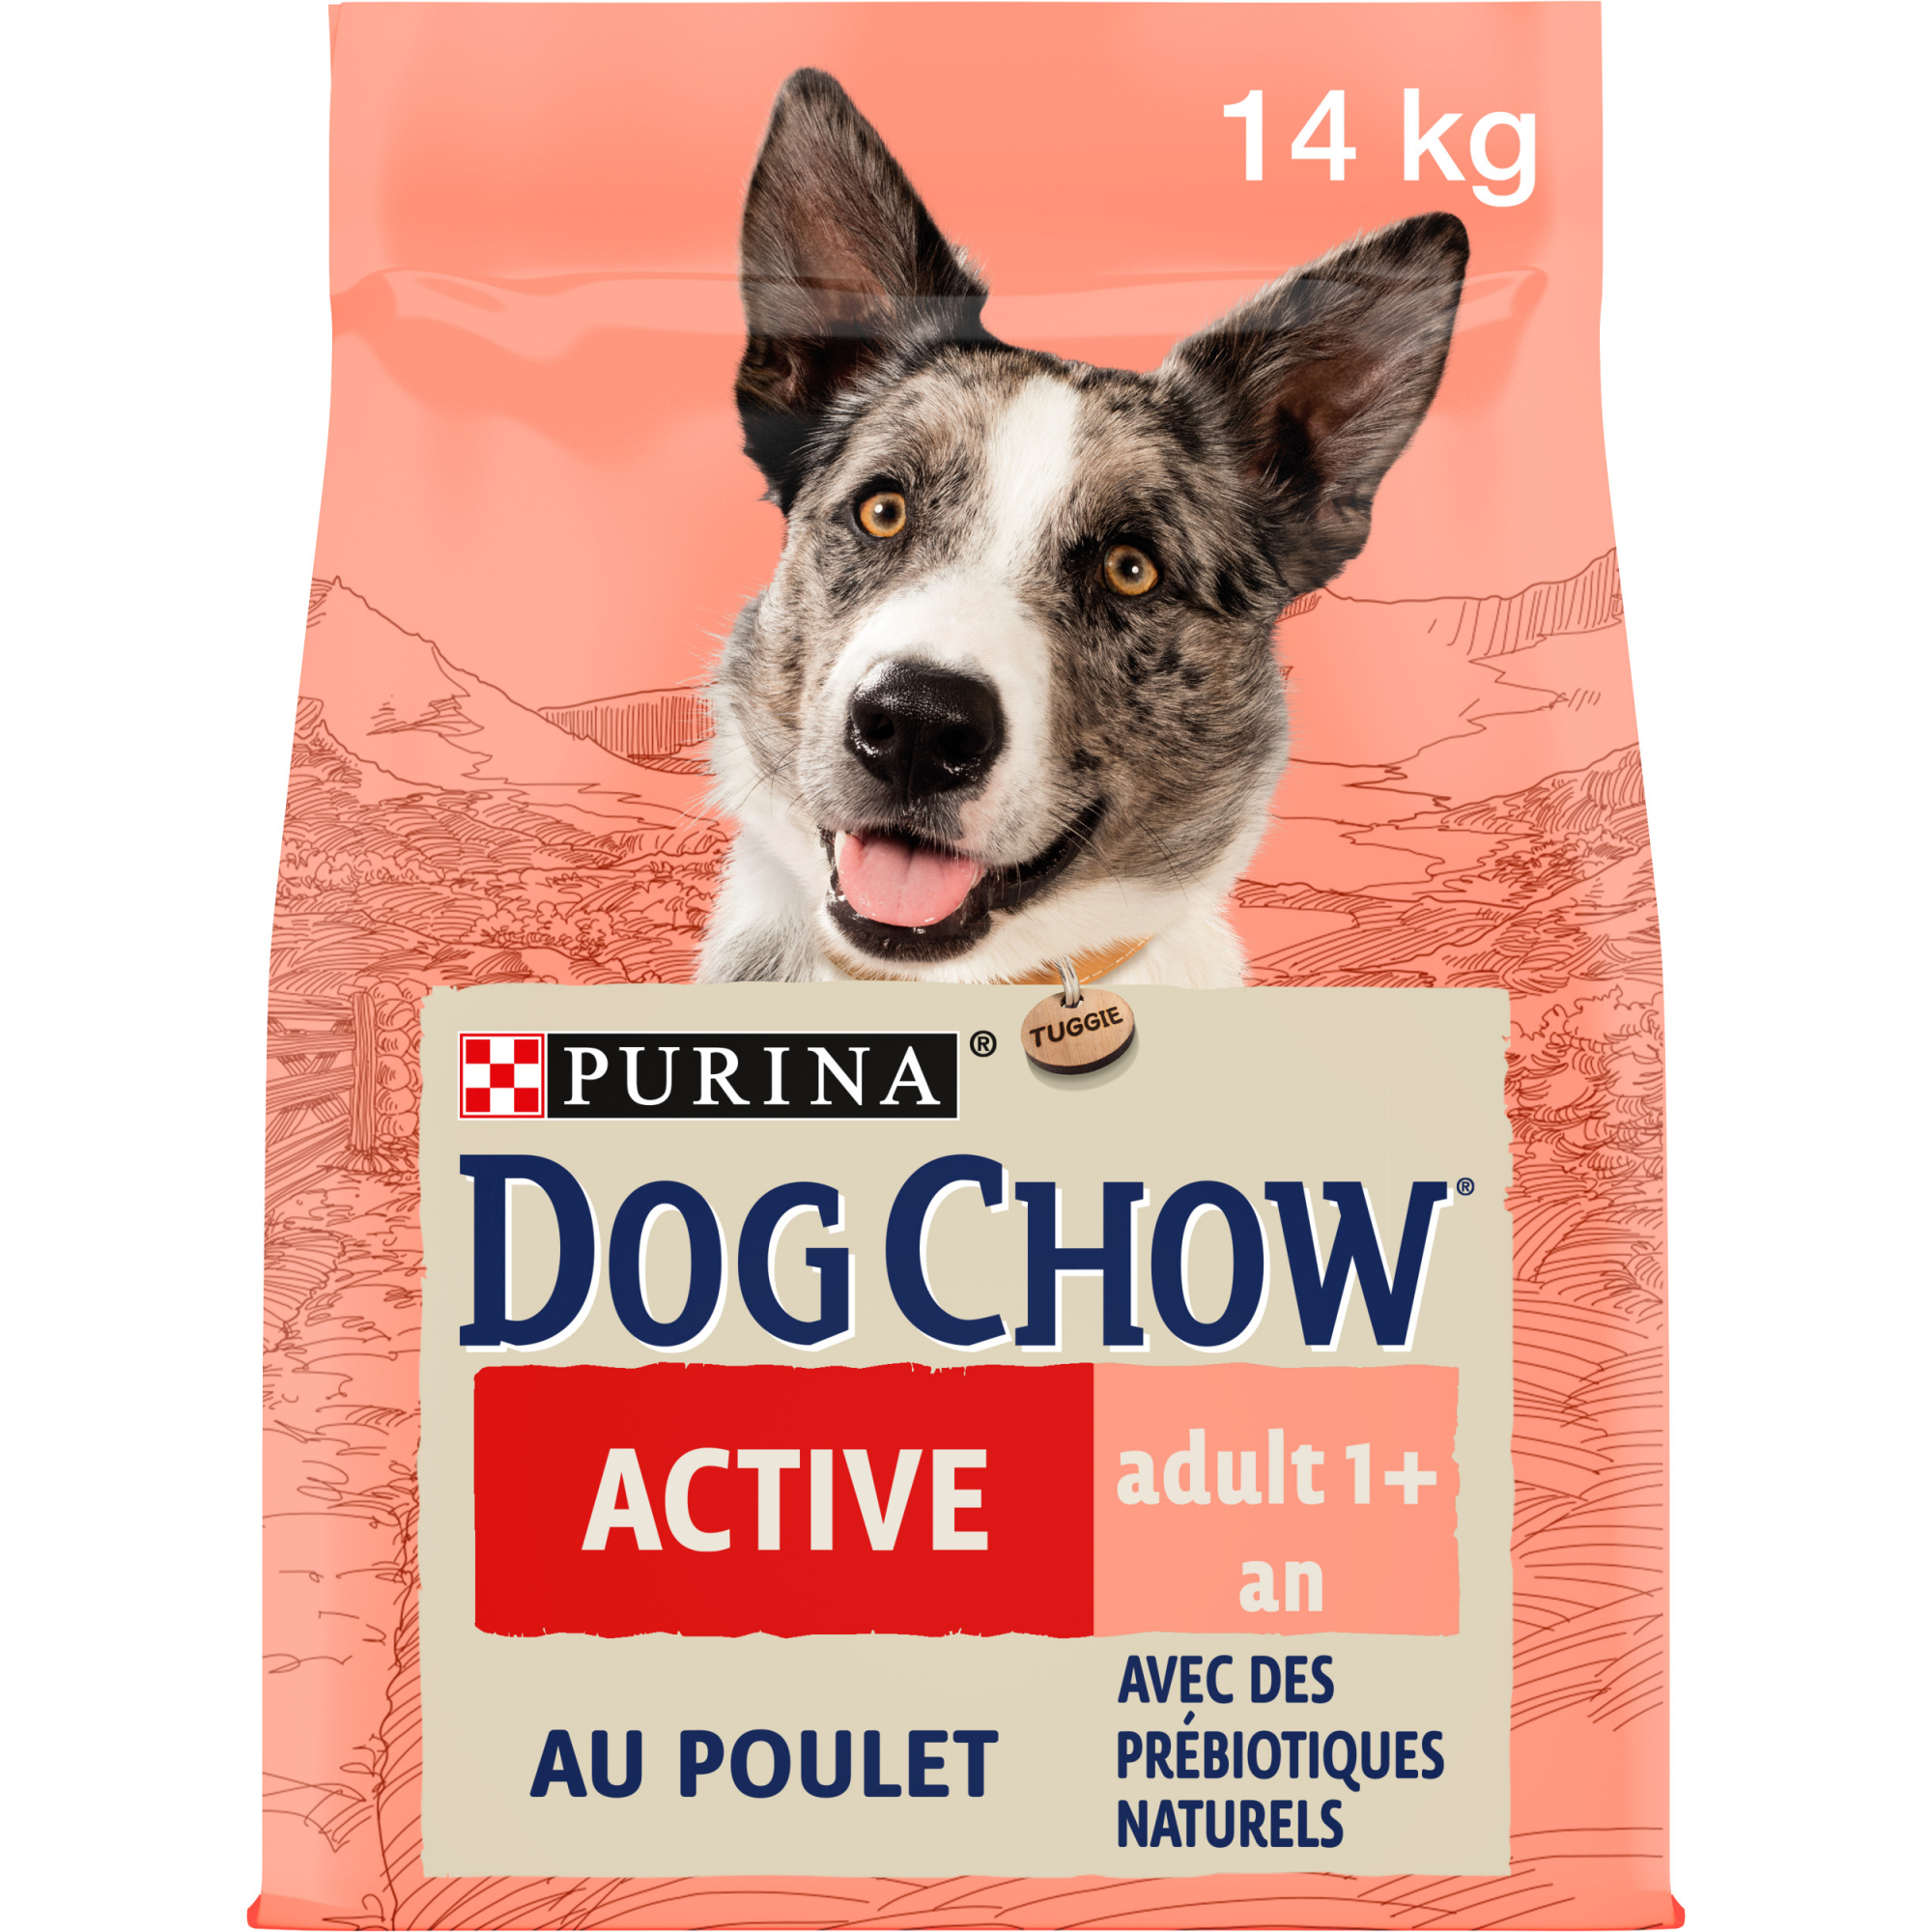 DOG CHOW Active met kip